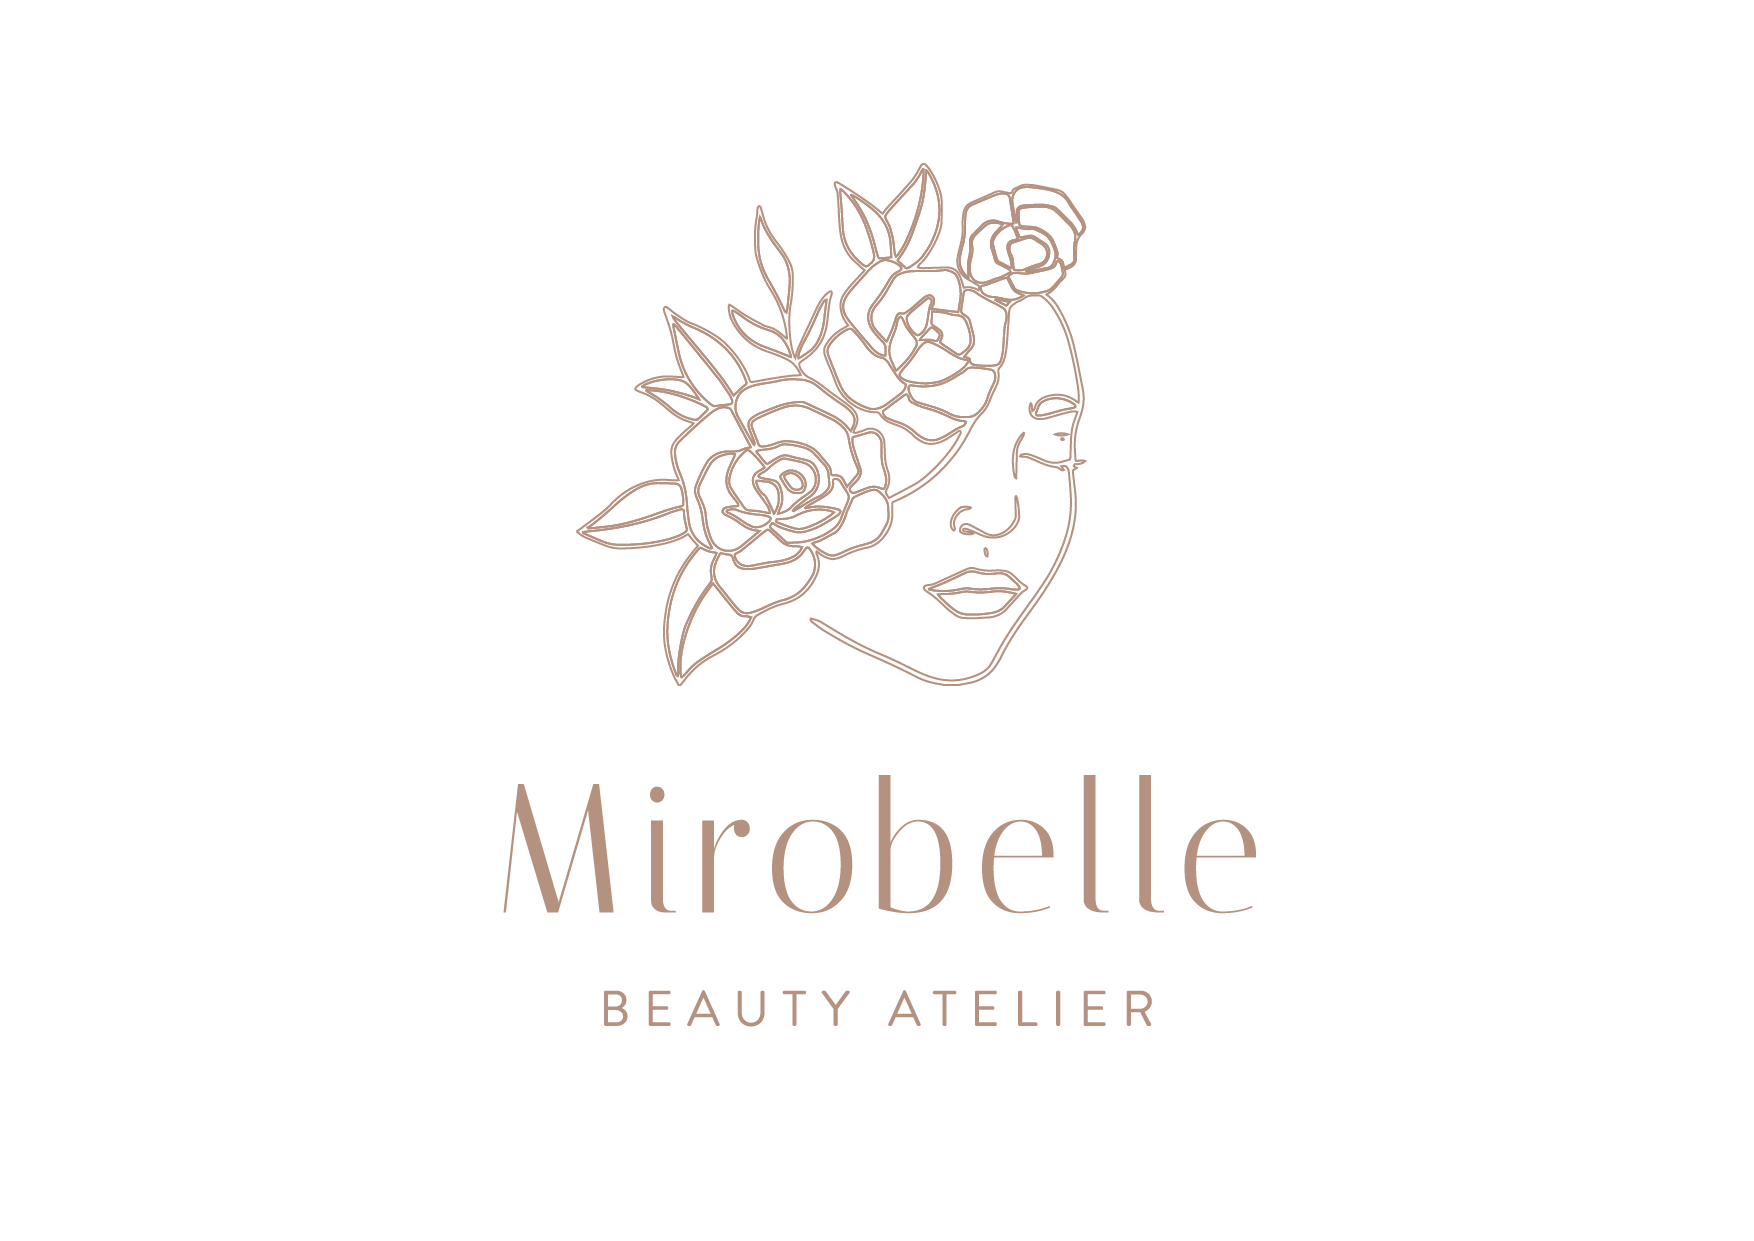 Mirobelle Beauty Atelier